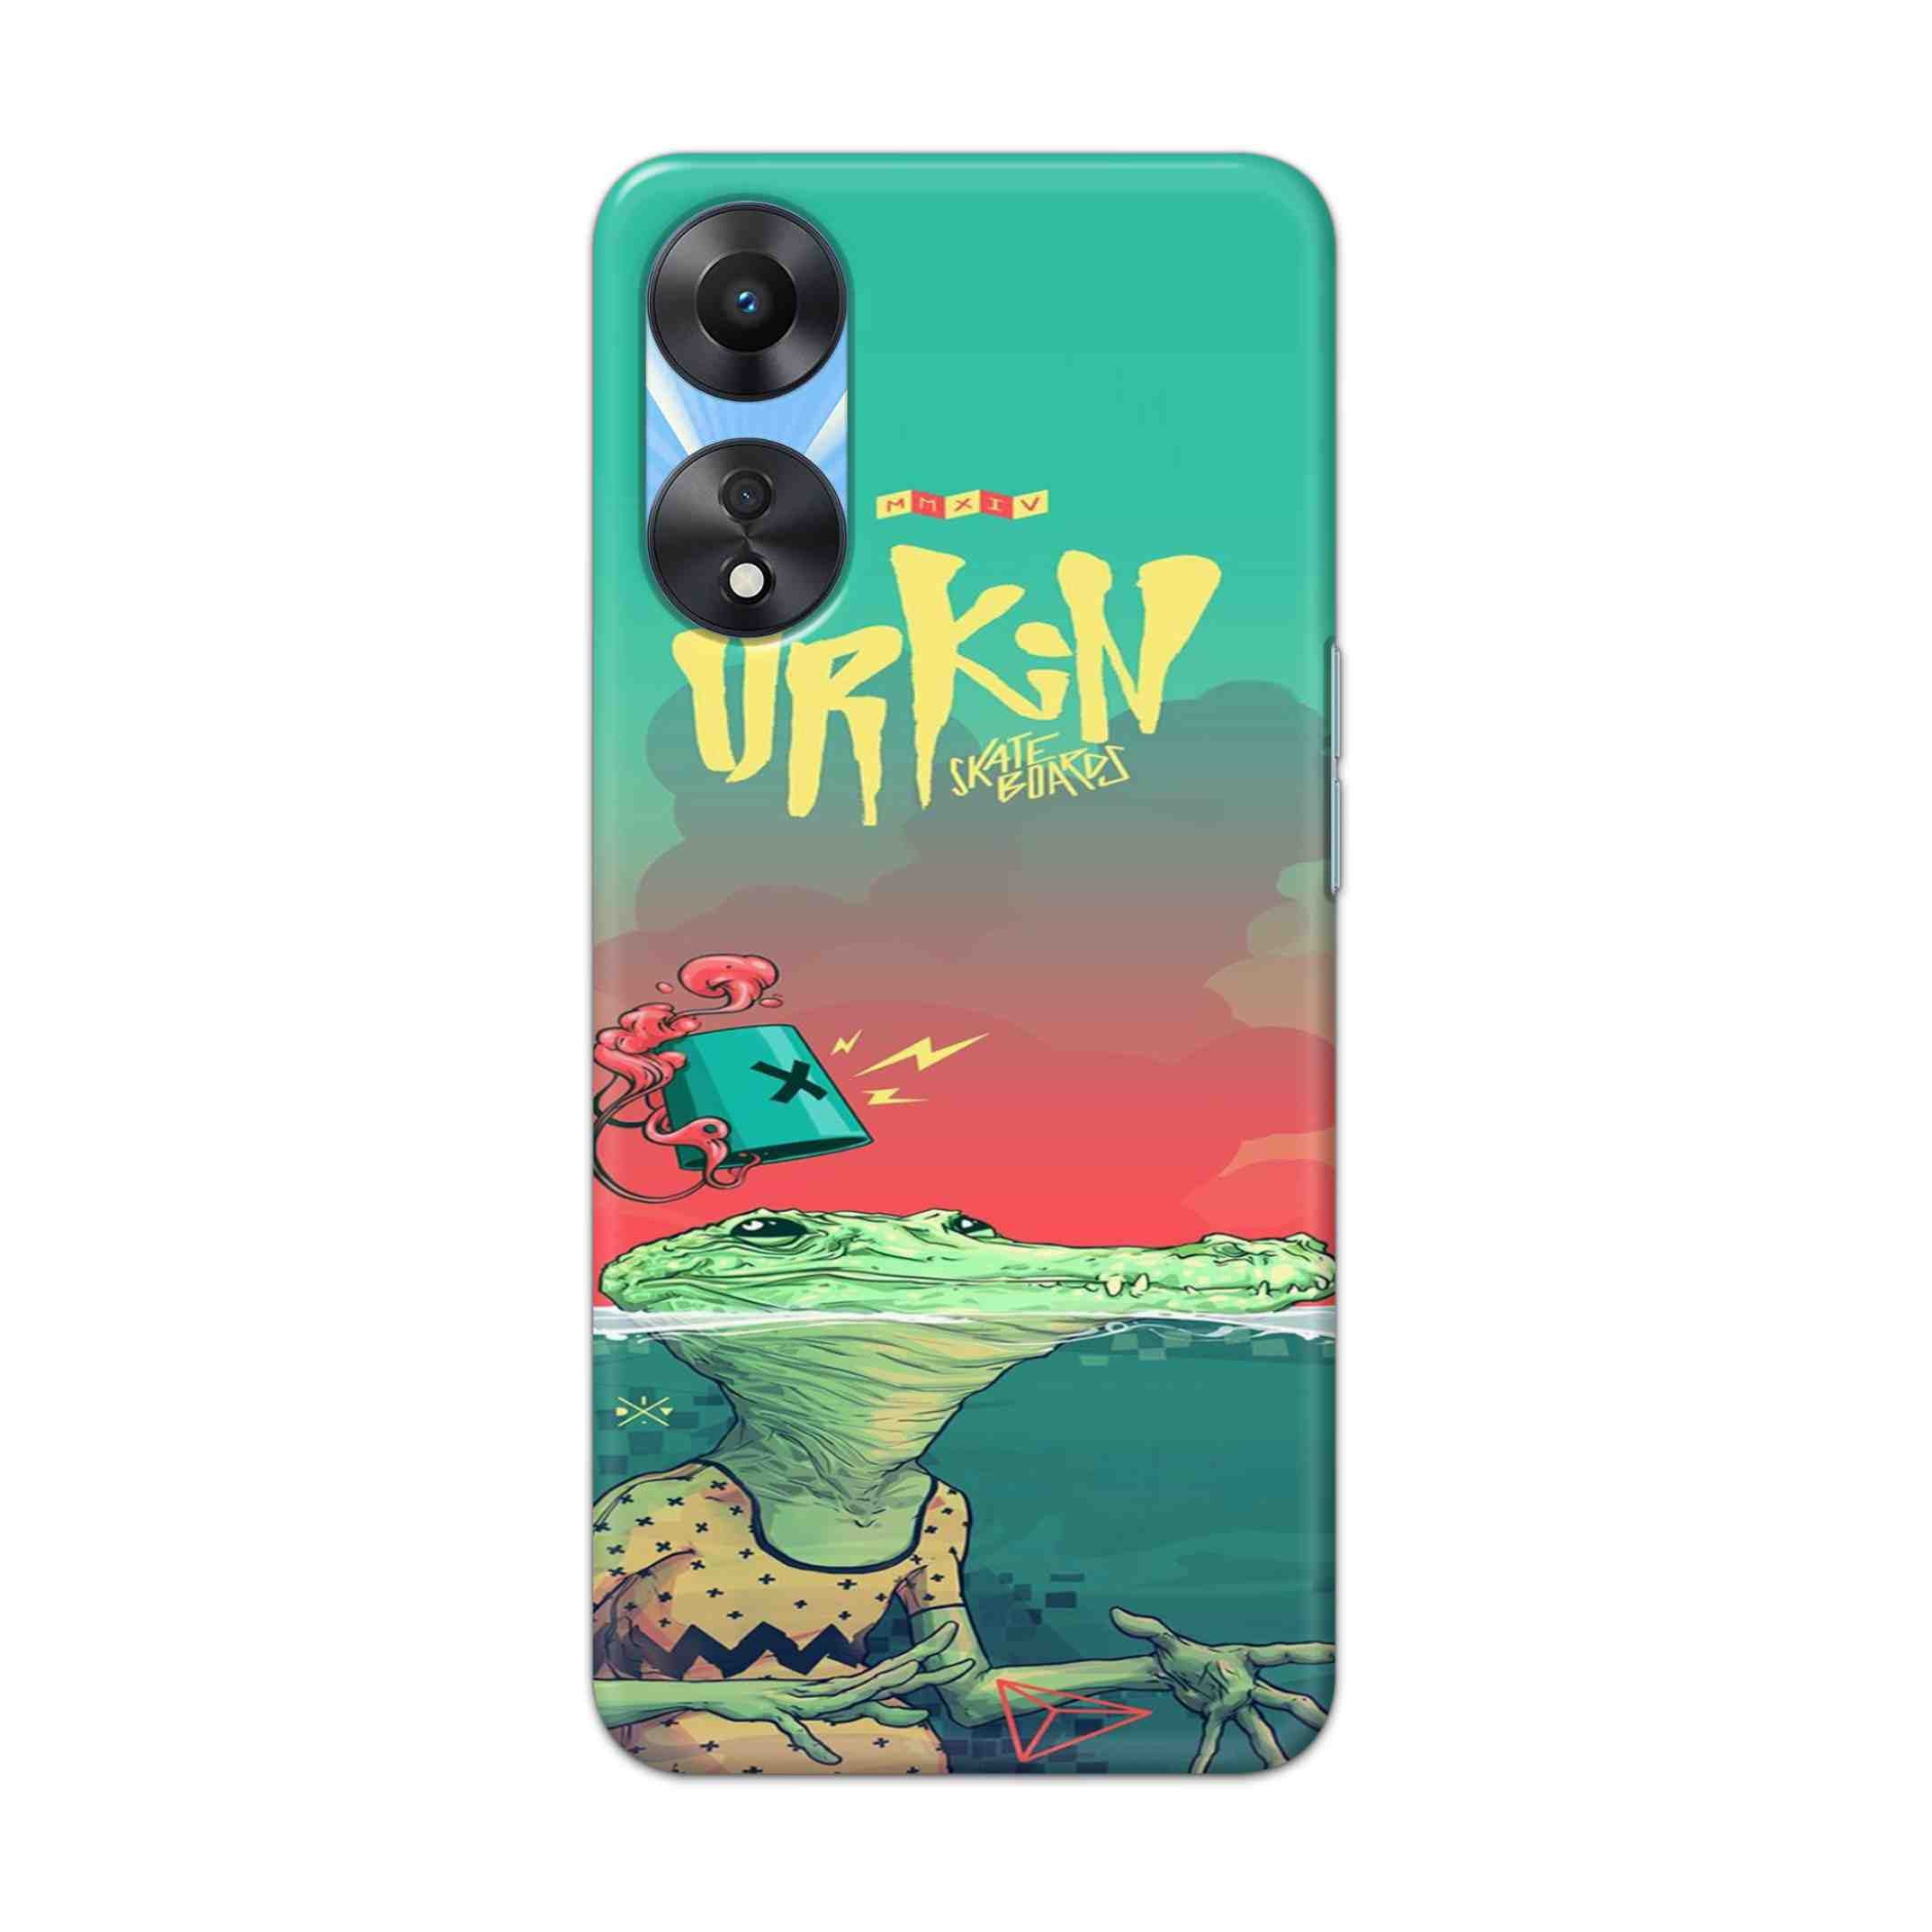 Buy Urkin Hard Back Mobile Phone Case Cover For OPPO A78 Online